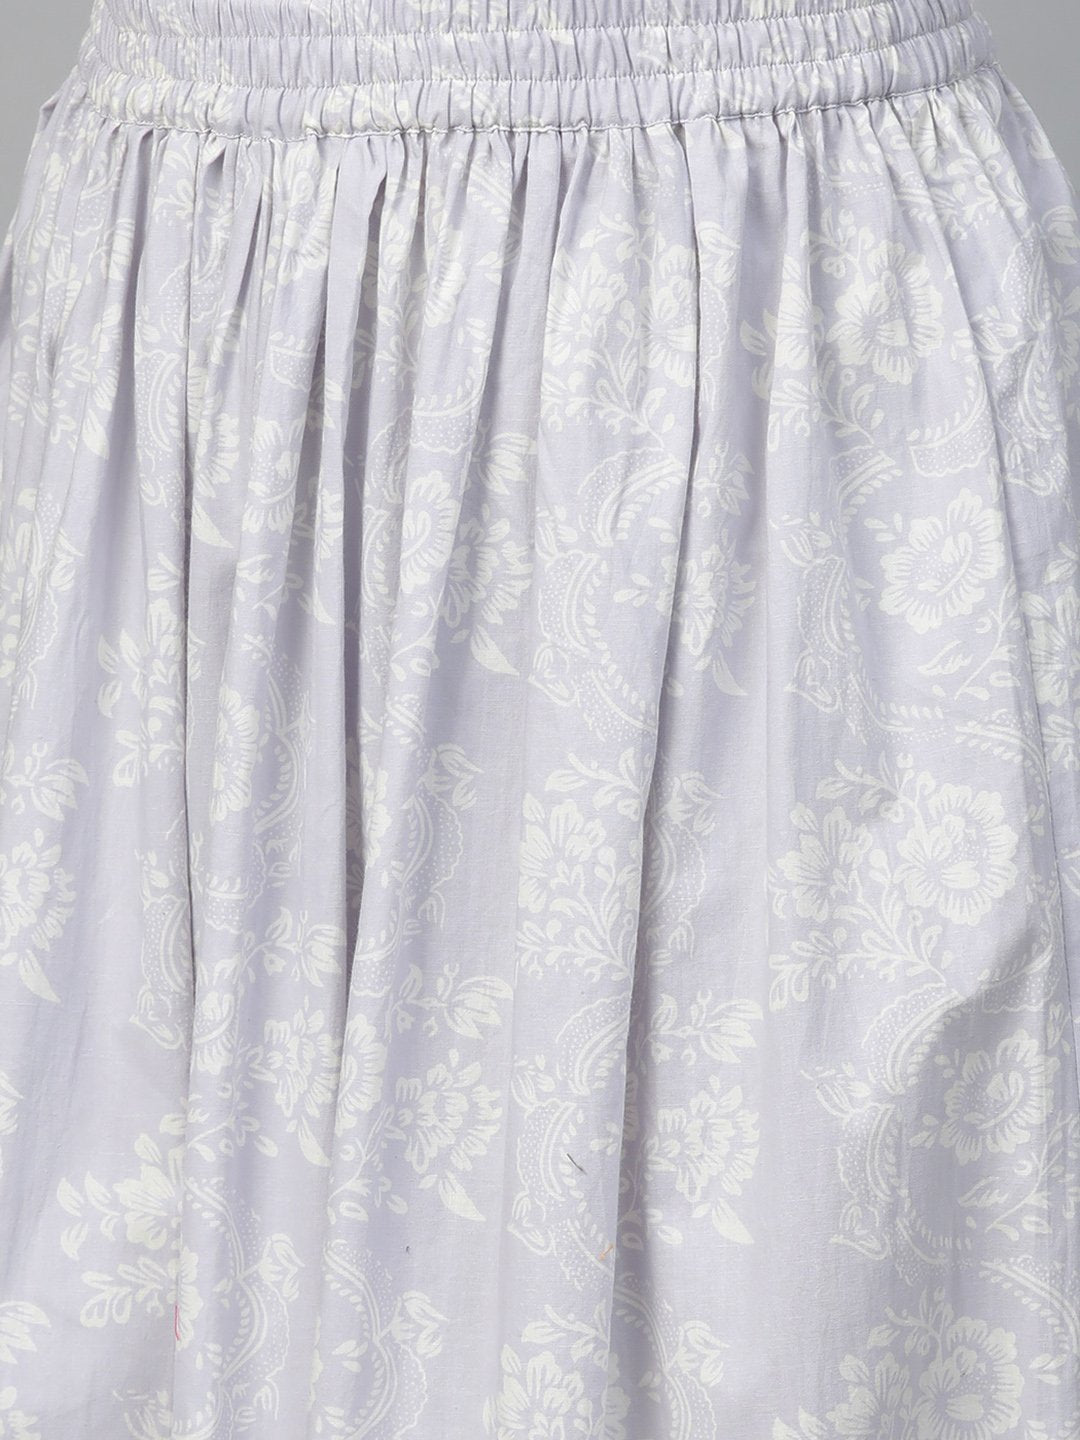 Women's Nayo Pink & Off White Straight Floral Printed Kurta And Skirt Set - Nayo Clothing